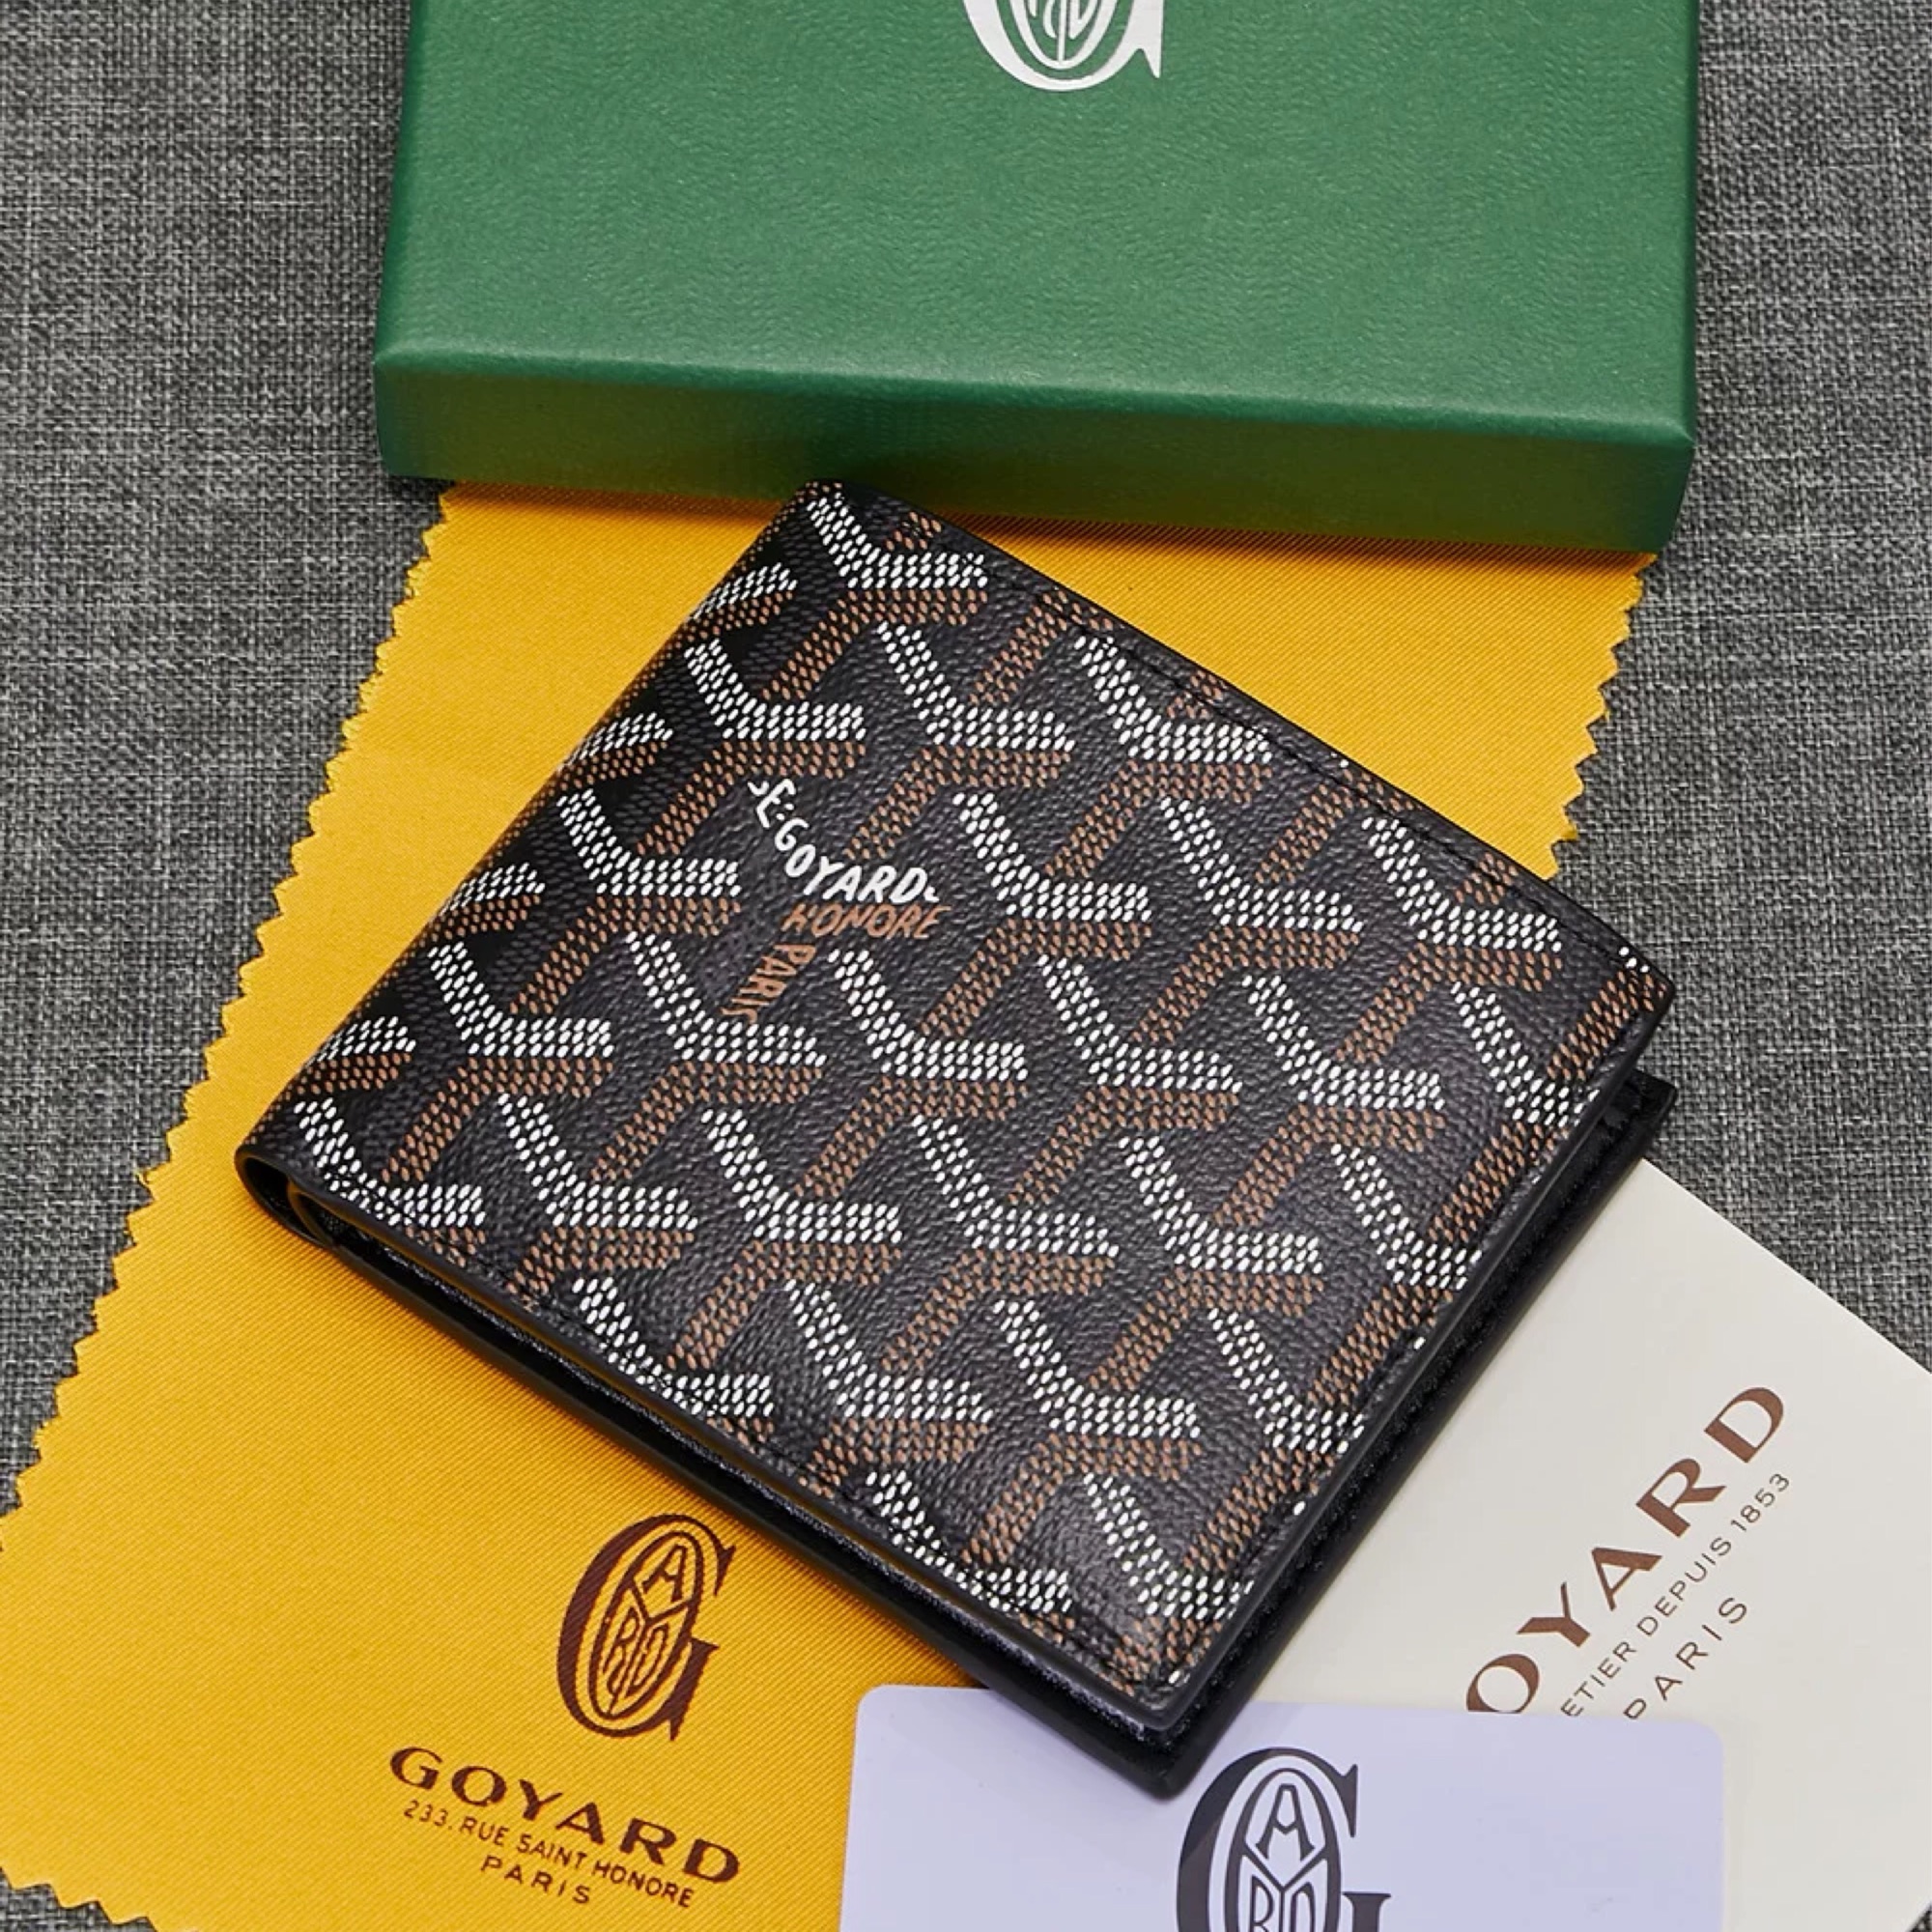 Goyard, the 165-year-old hype brand